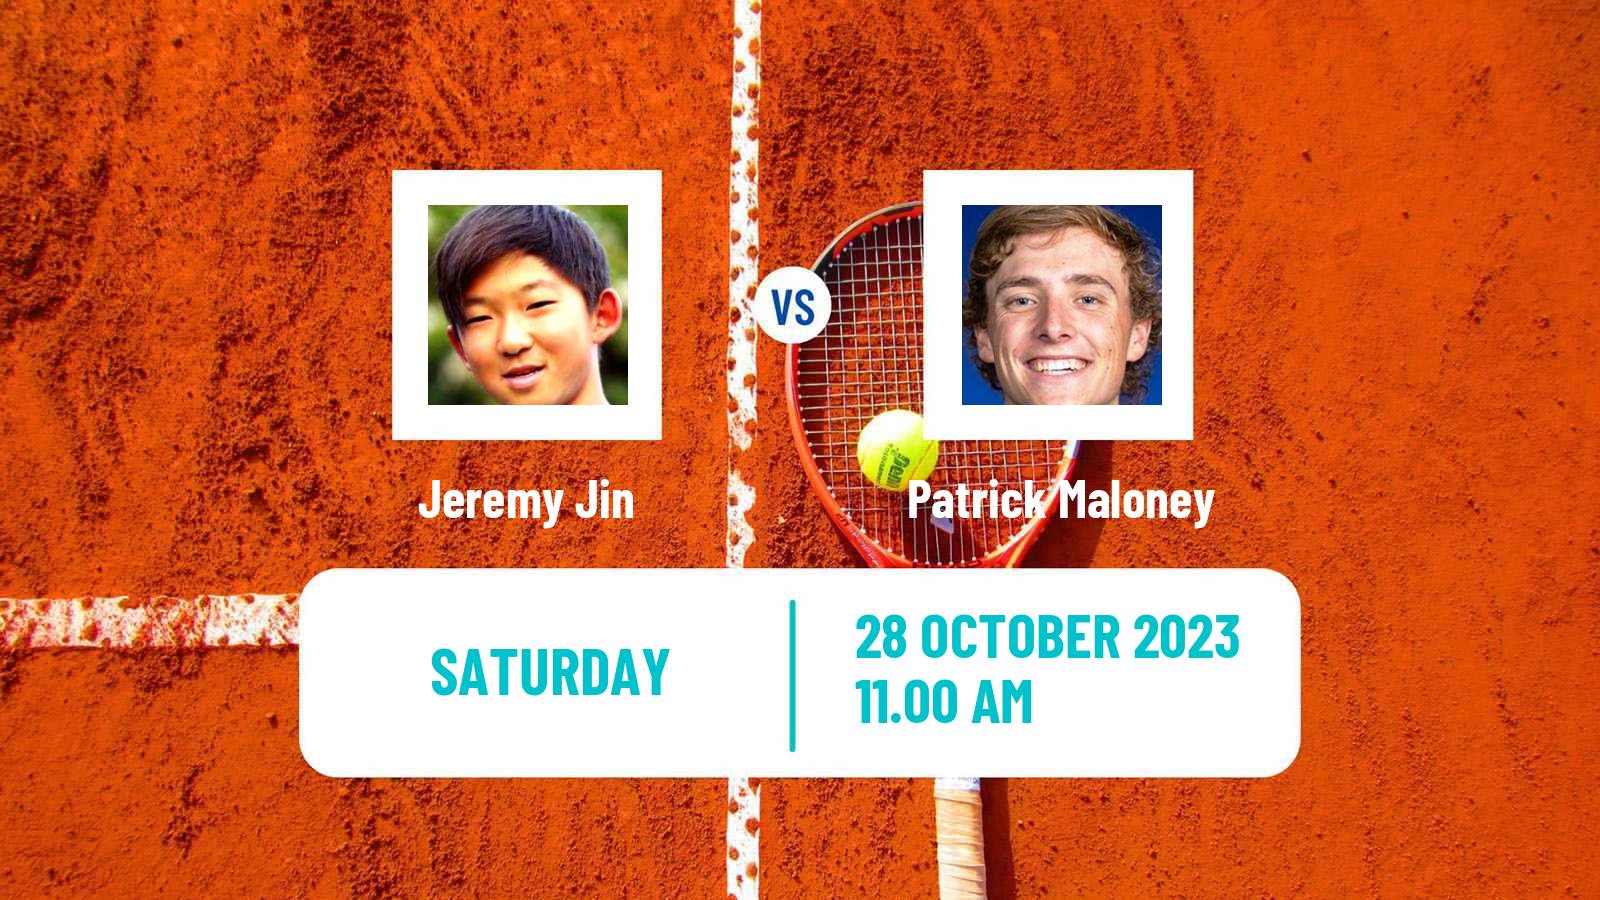 Tennis ITF M15 Tallahassee Fl Men Jeremy Jin - Patrick Maloney